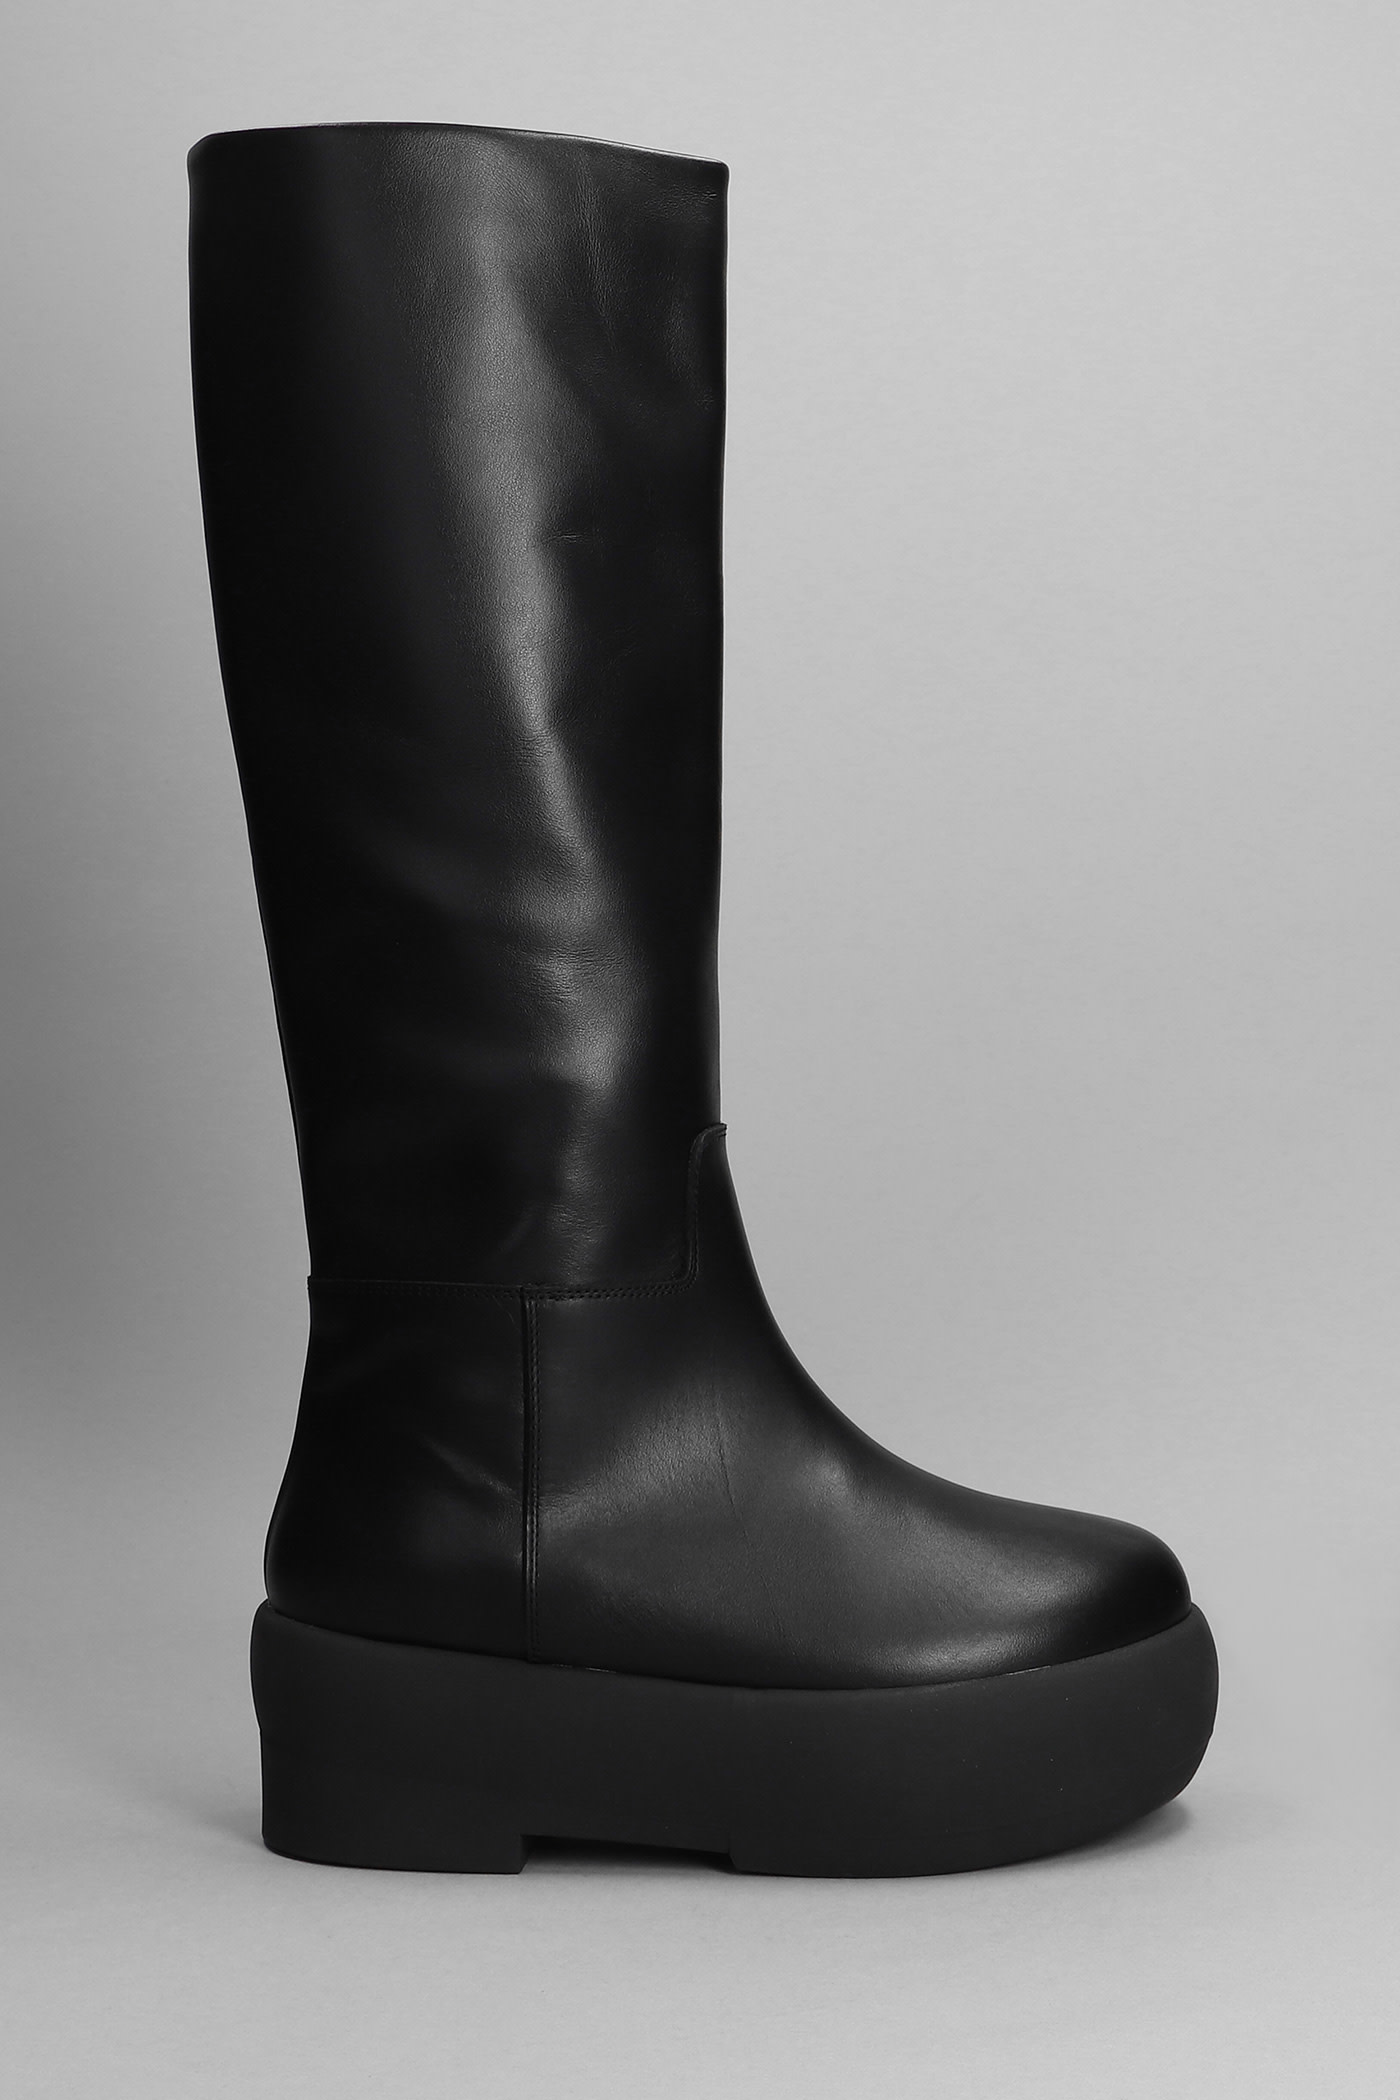 GIA BORGHINI Gia 16 Low Heels Boots In Black Leather